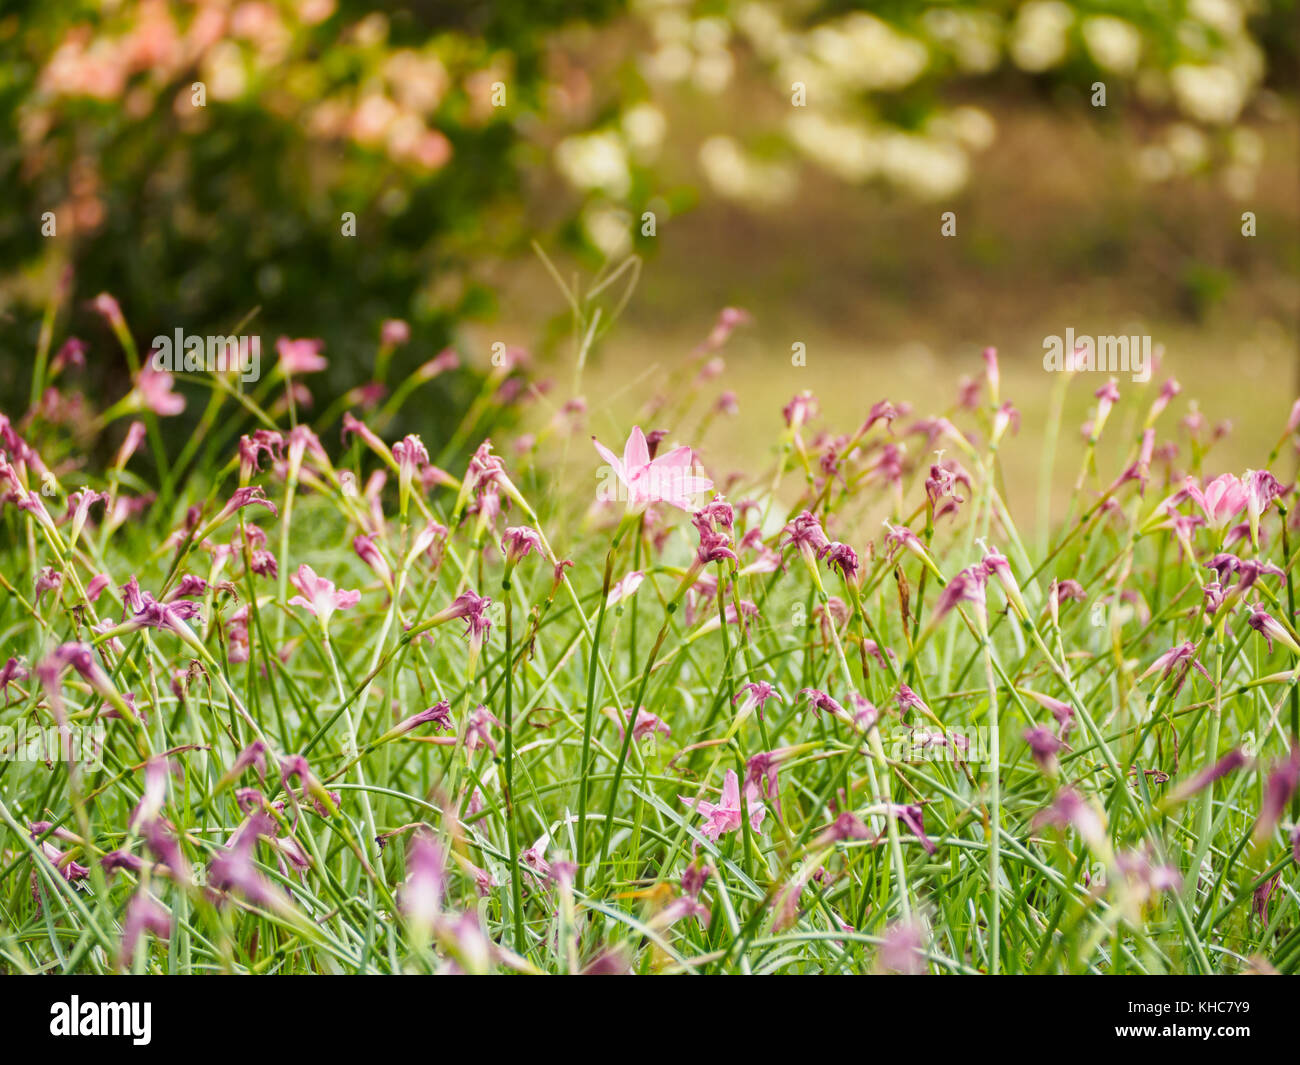 zephyranthes minuta or pink rain lily in garden Stock Photo